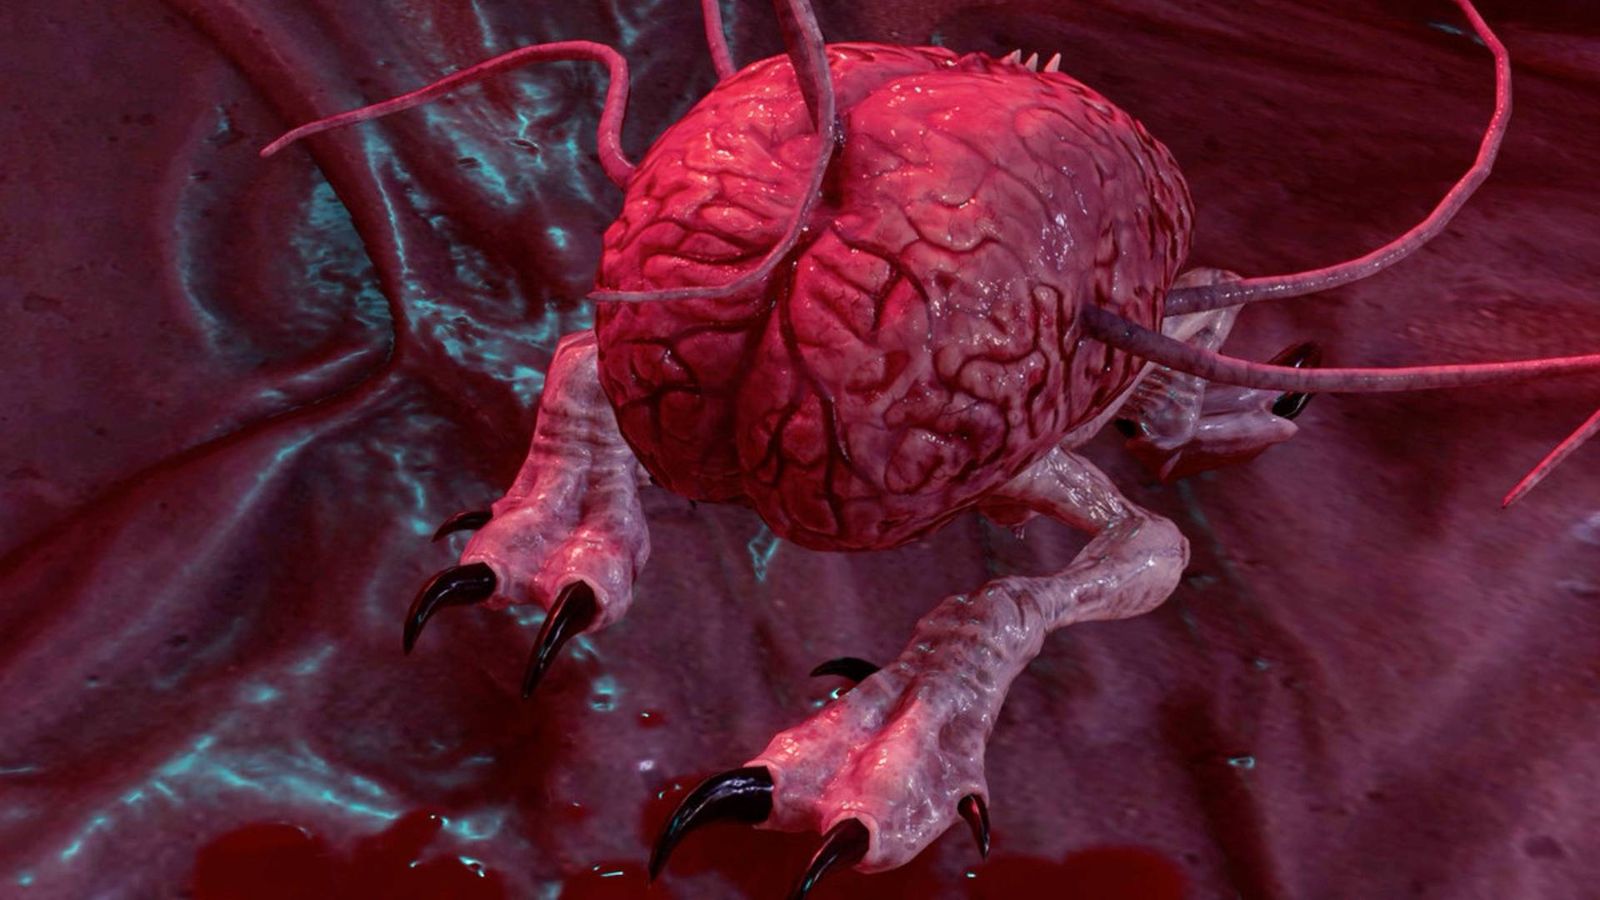 An image of Us the brain in Baldur's Gate 3